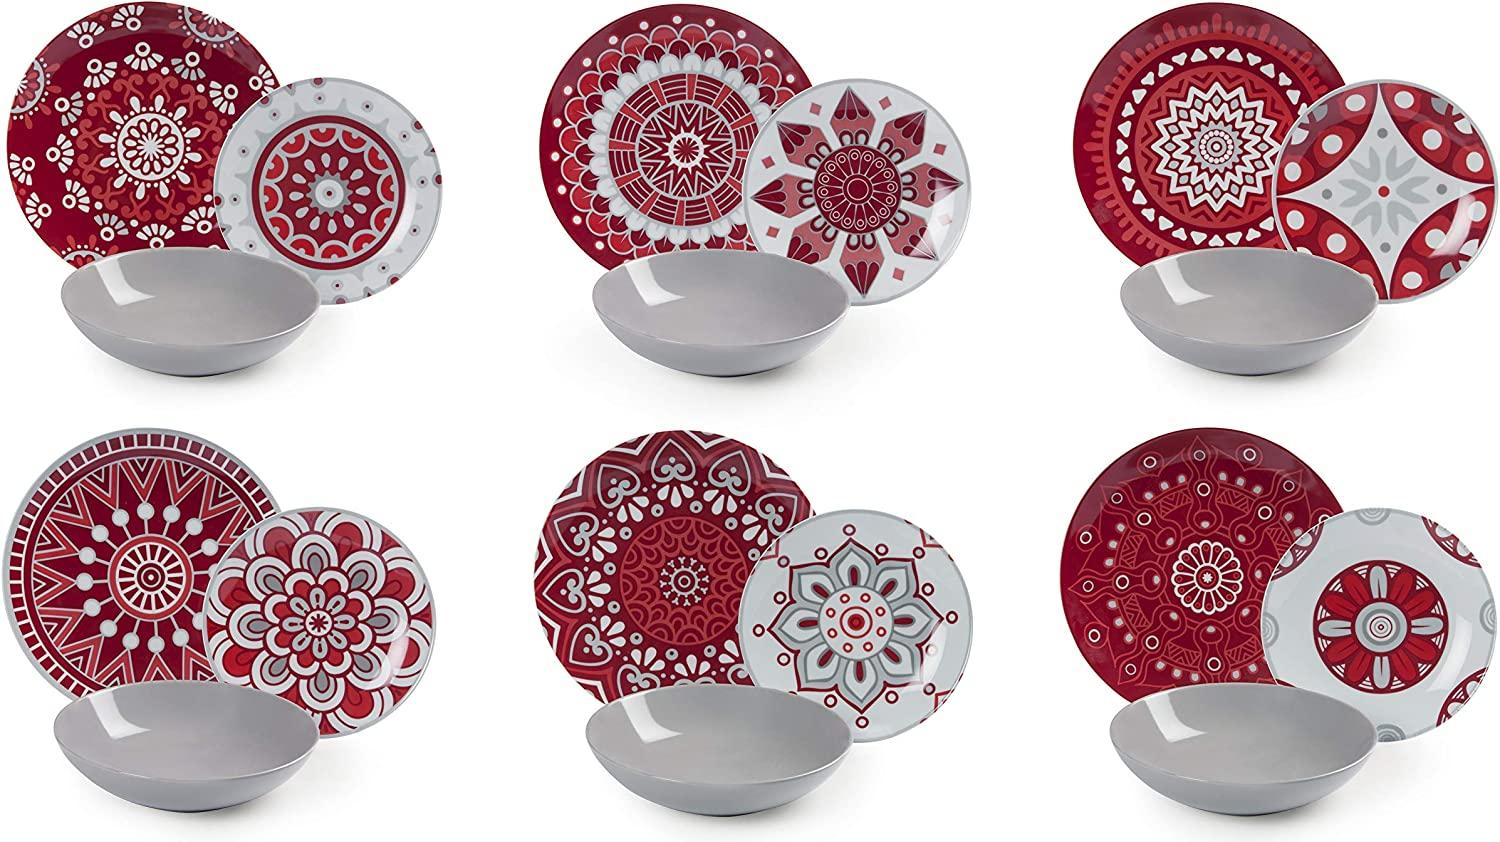 Excelsa Mandala Red Geschirrset, 18-teilig, Porzellan und Keramik, mehrfarbig Bild 1